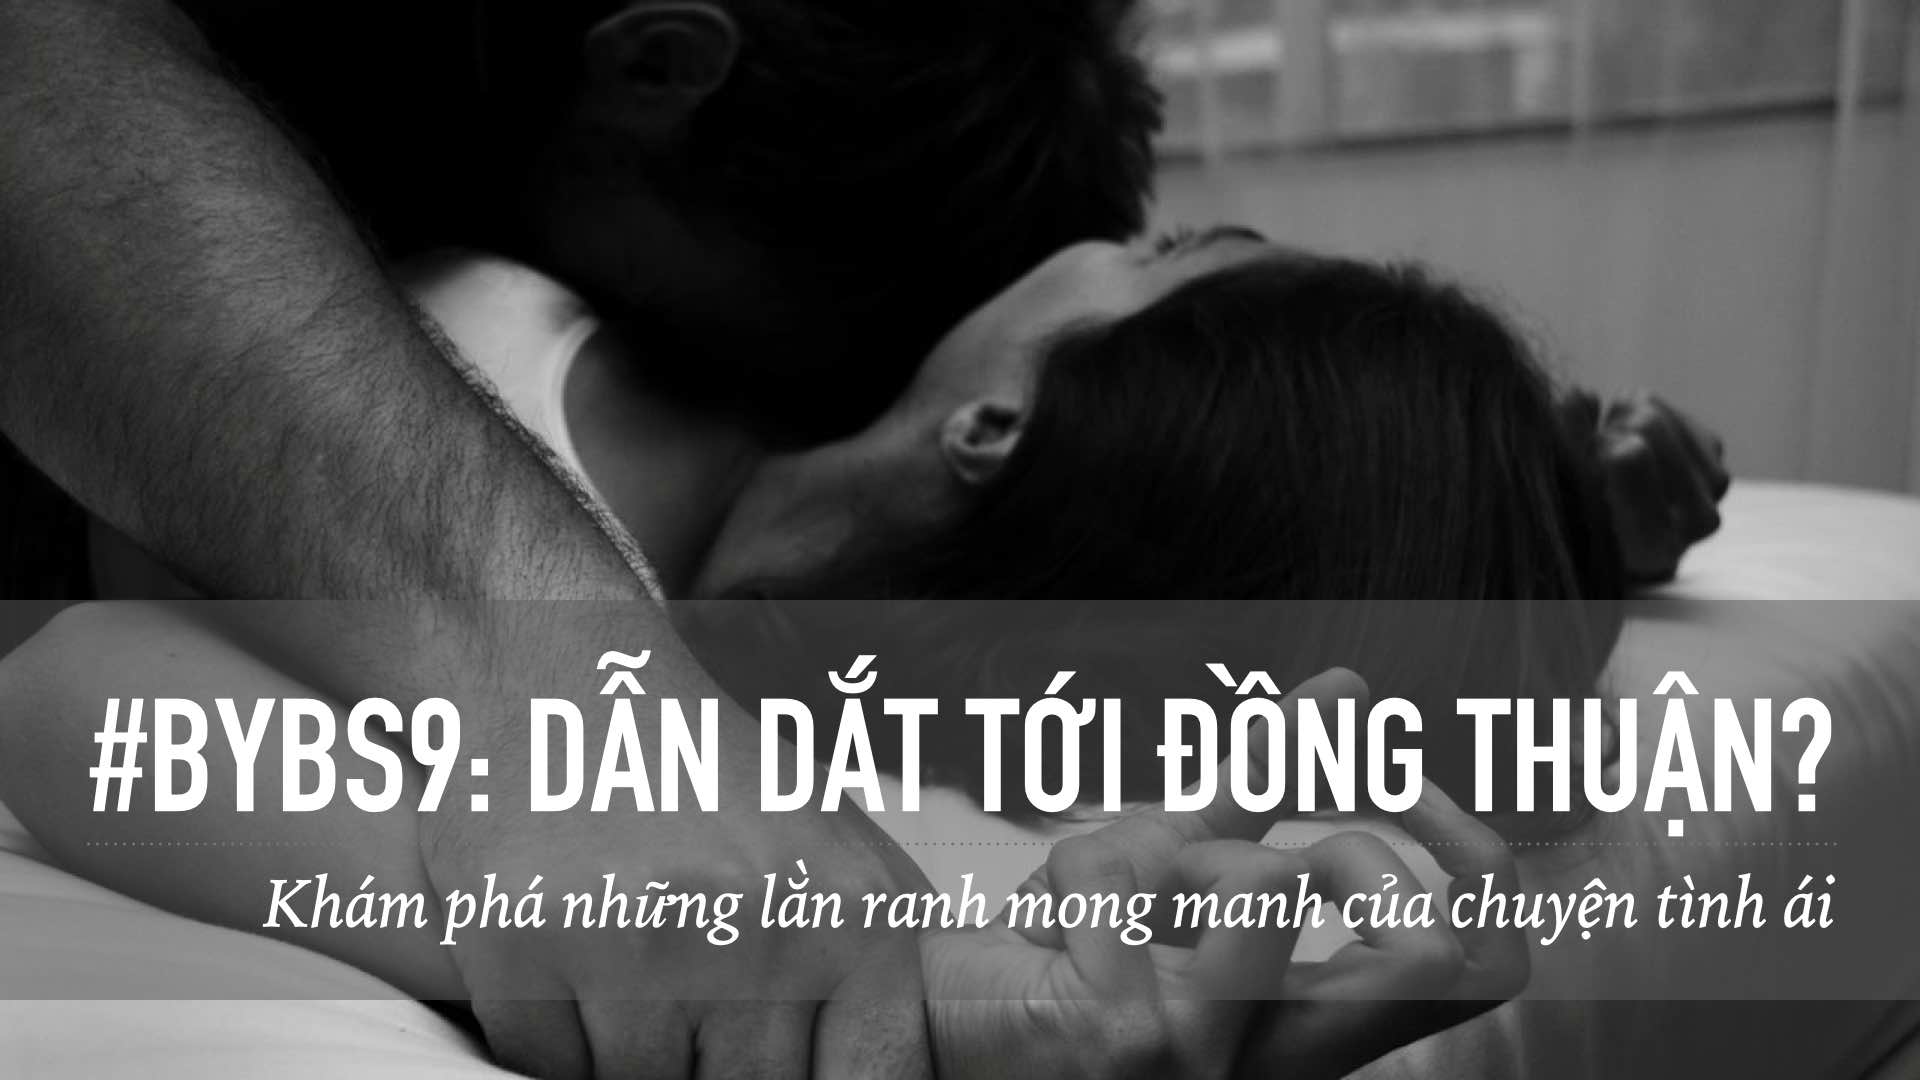 #BYBS9 - Dẫn Dắt Tới Đồng Thuận?